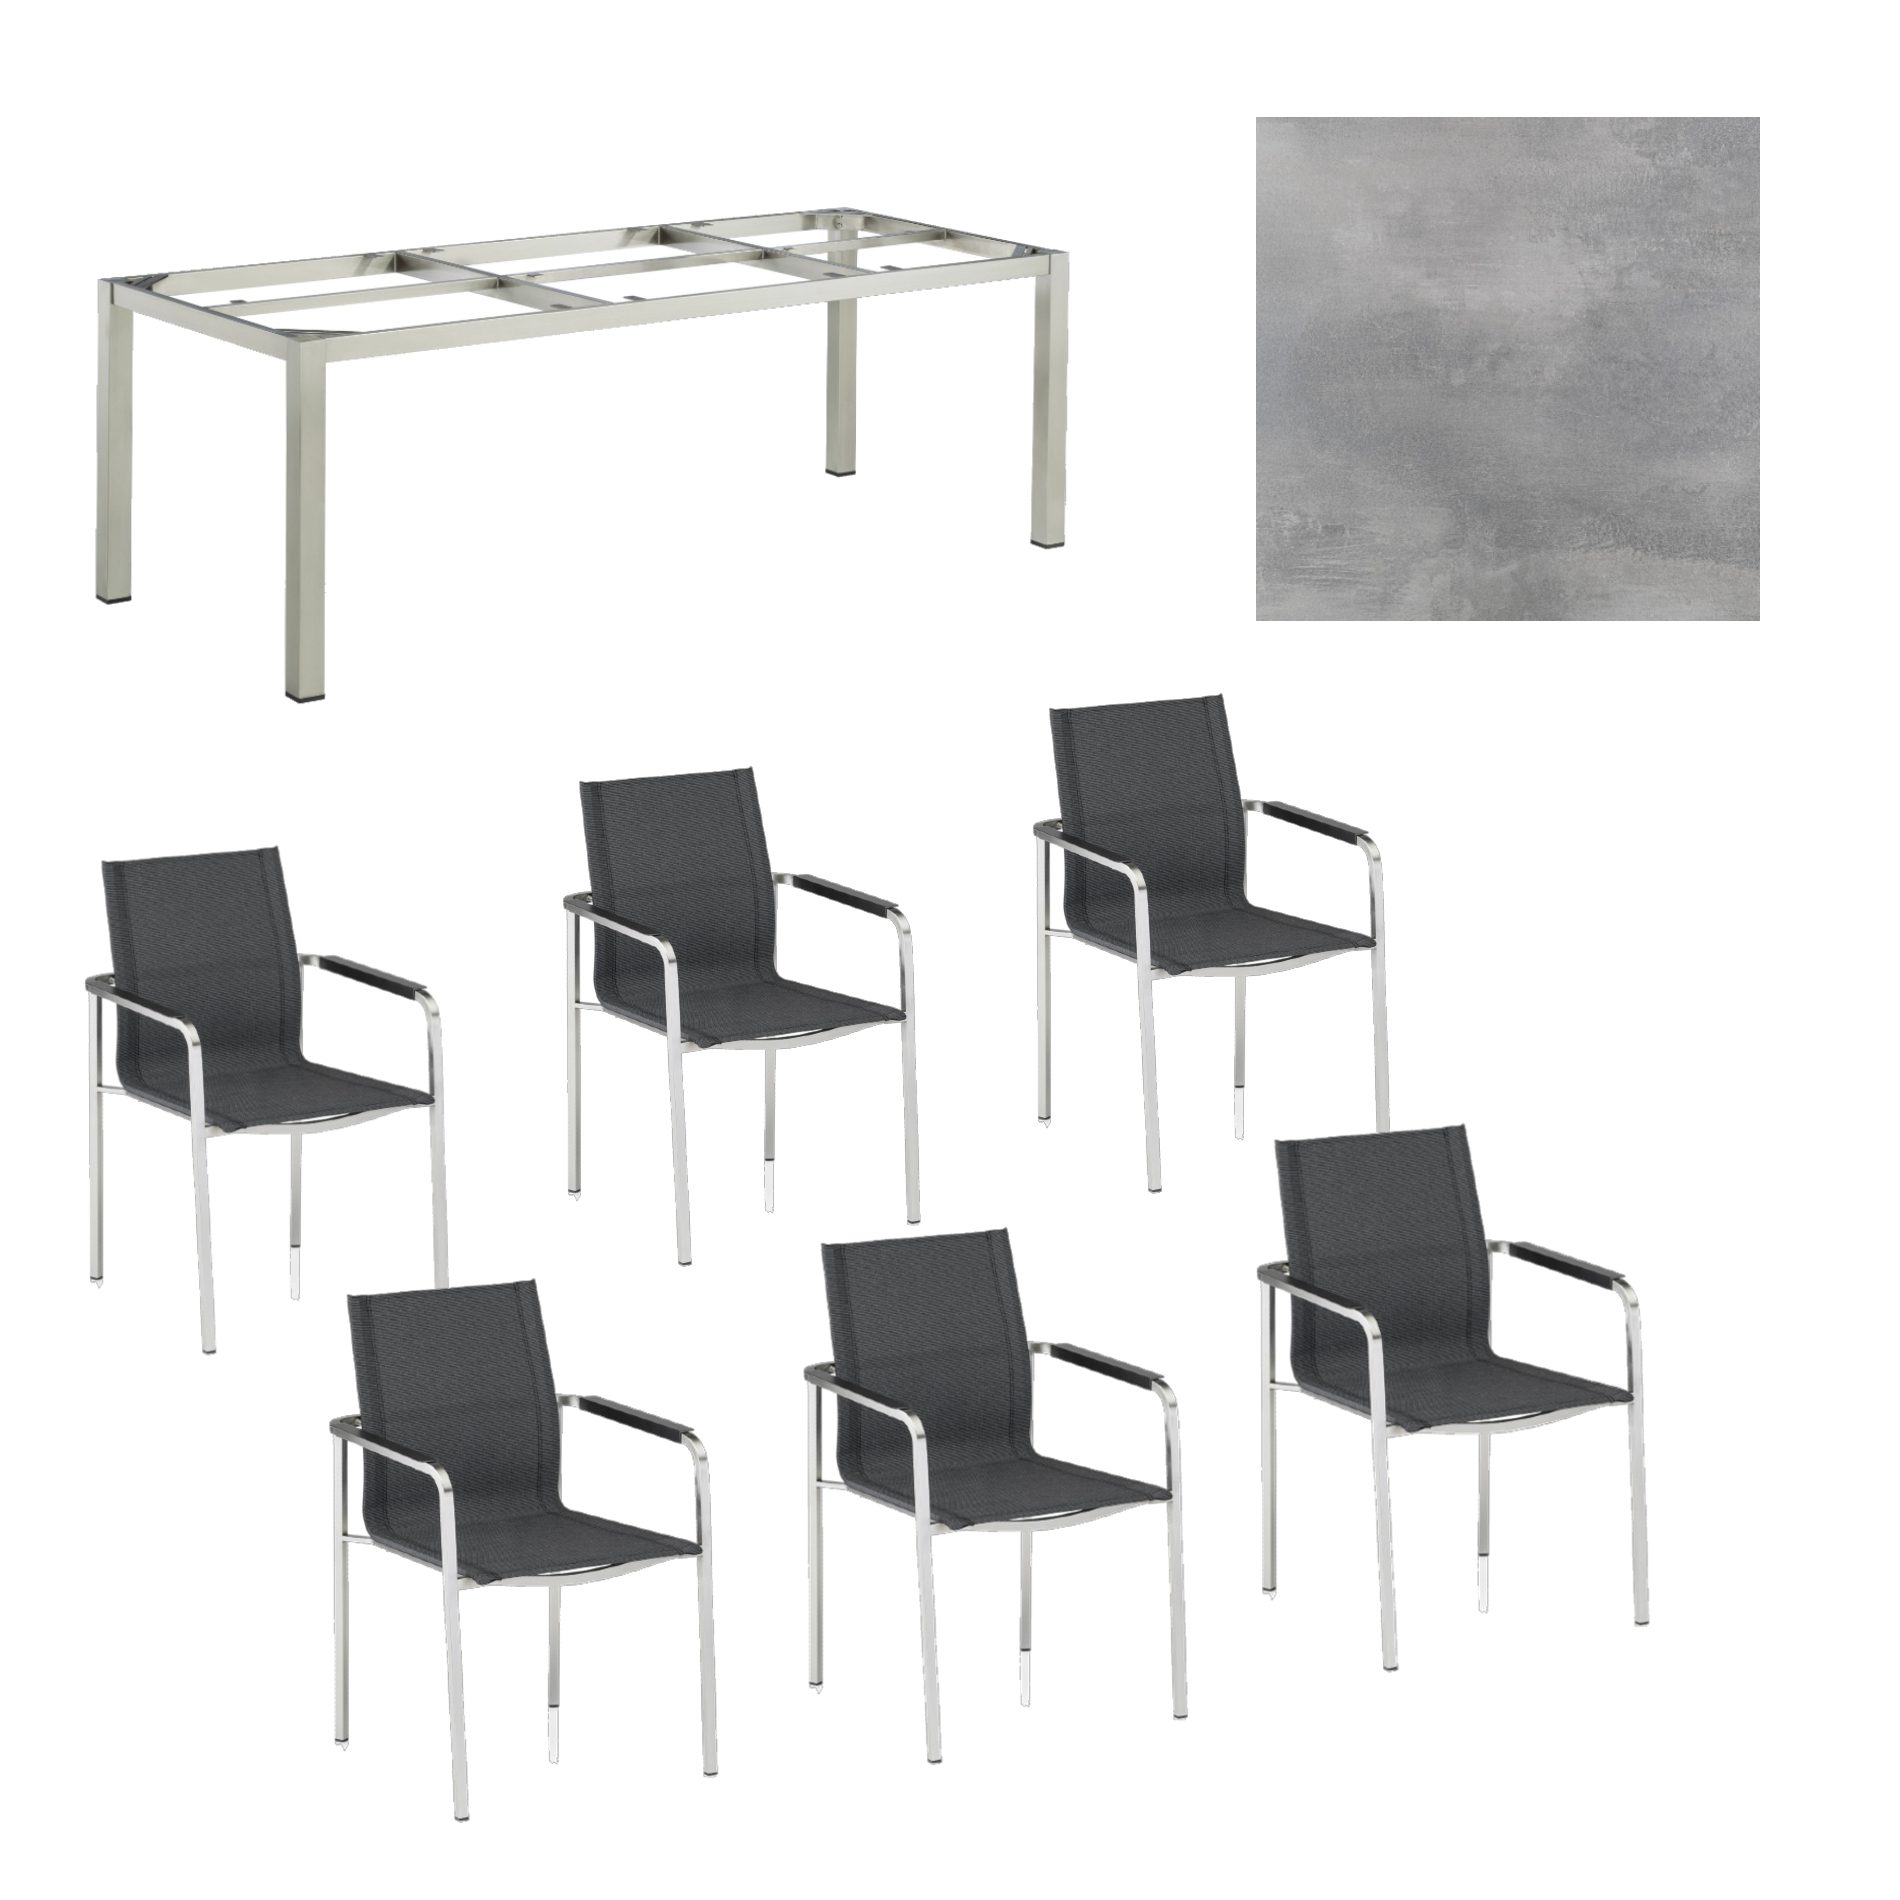 Kettler Gartenmöbel-Set mit "Feel" Stapelstuhl und "Cubic" Tisch, Gestelle Edelstahl, Sitz grau meliert, Tischplatte HPL silber-grau